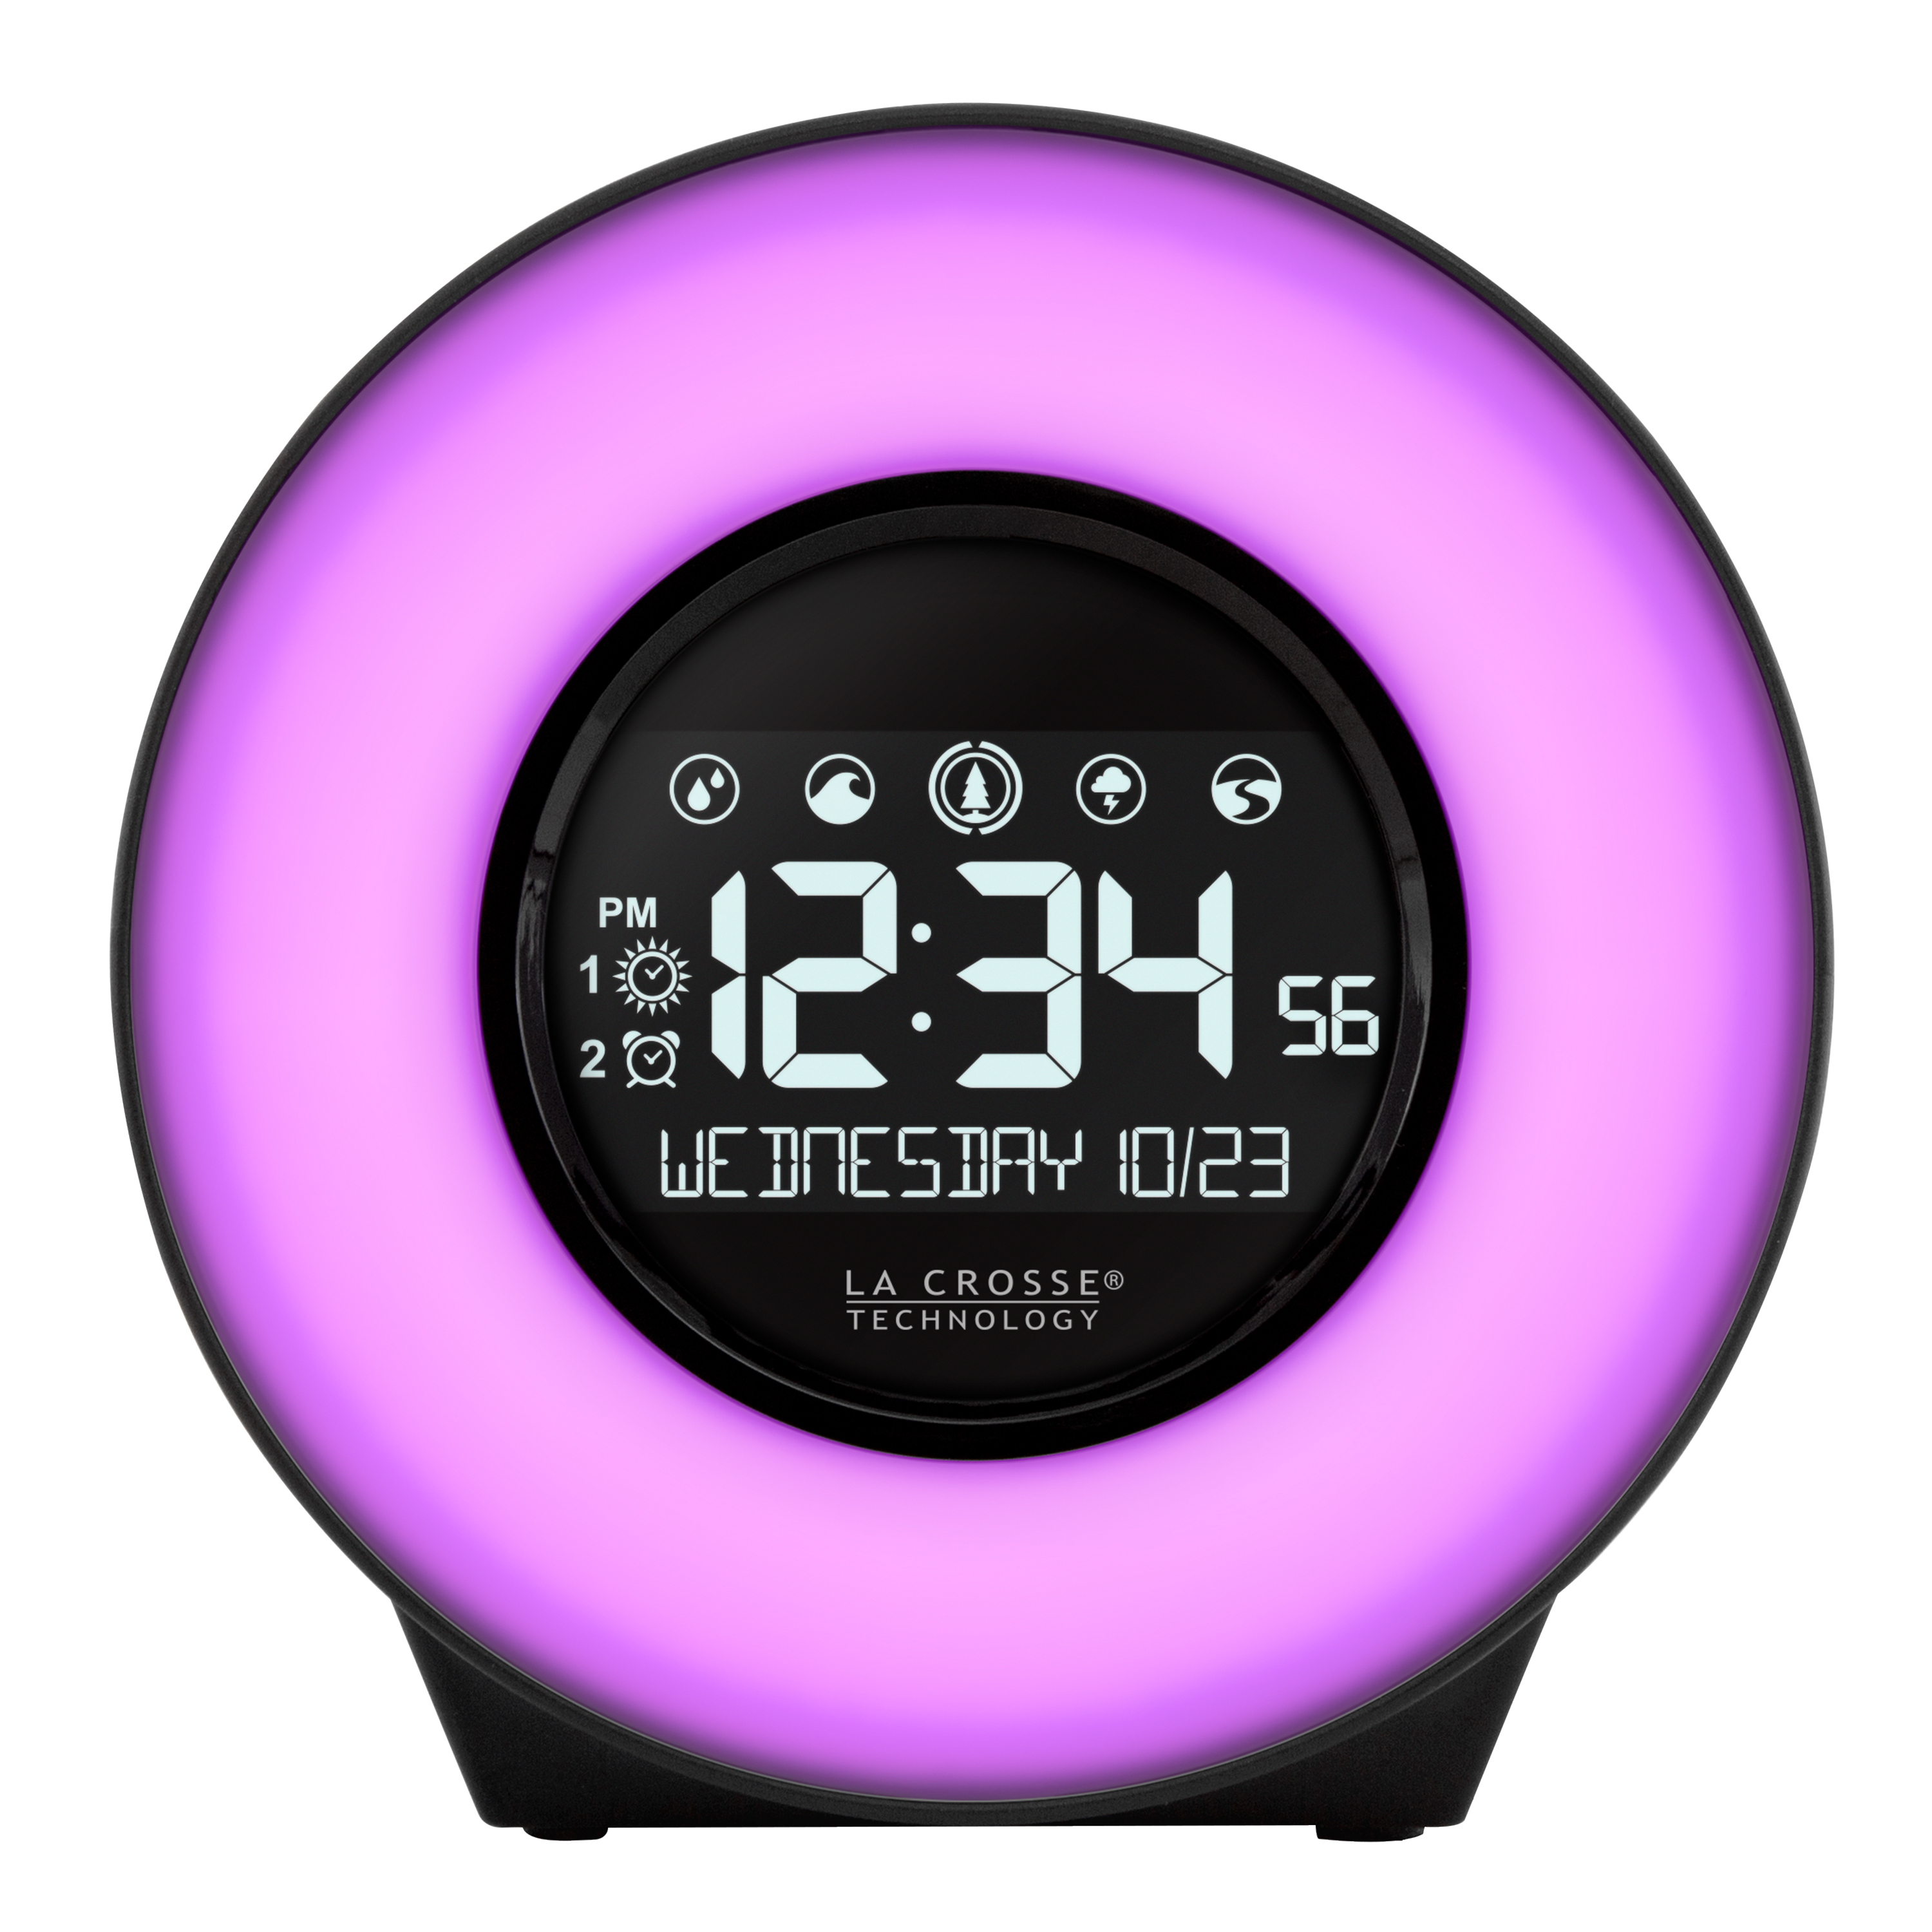 La Crosse Technology C83117 Multi-Color LCD Desk Digital Alarm Clock with Sounds and USB - image 4 of 10